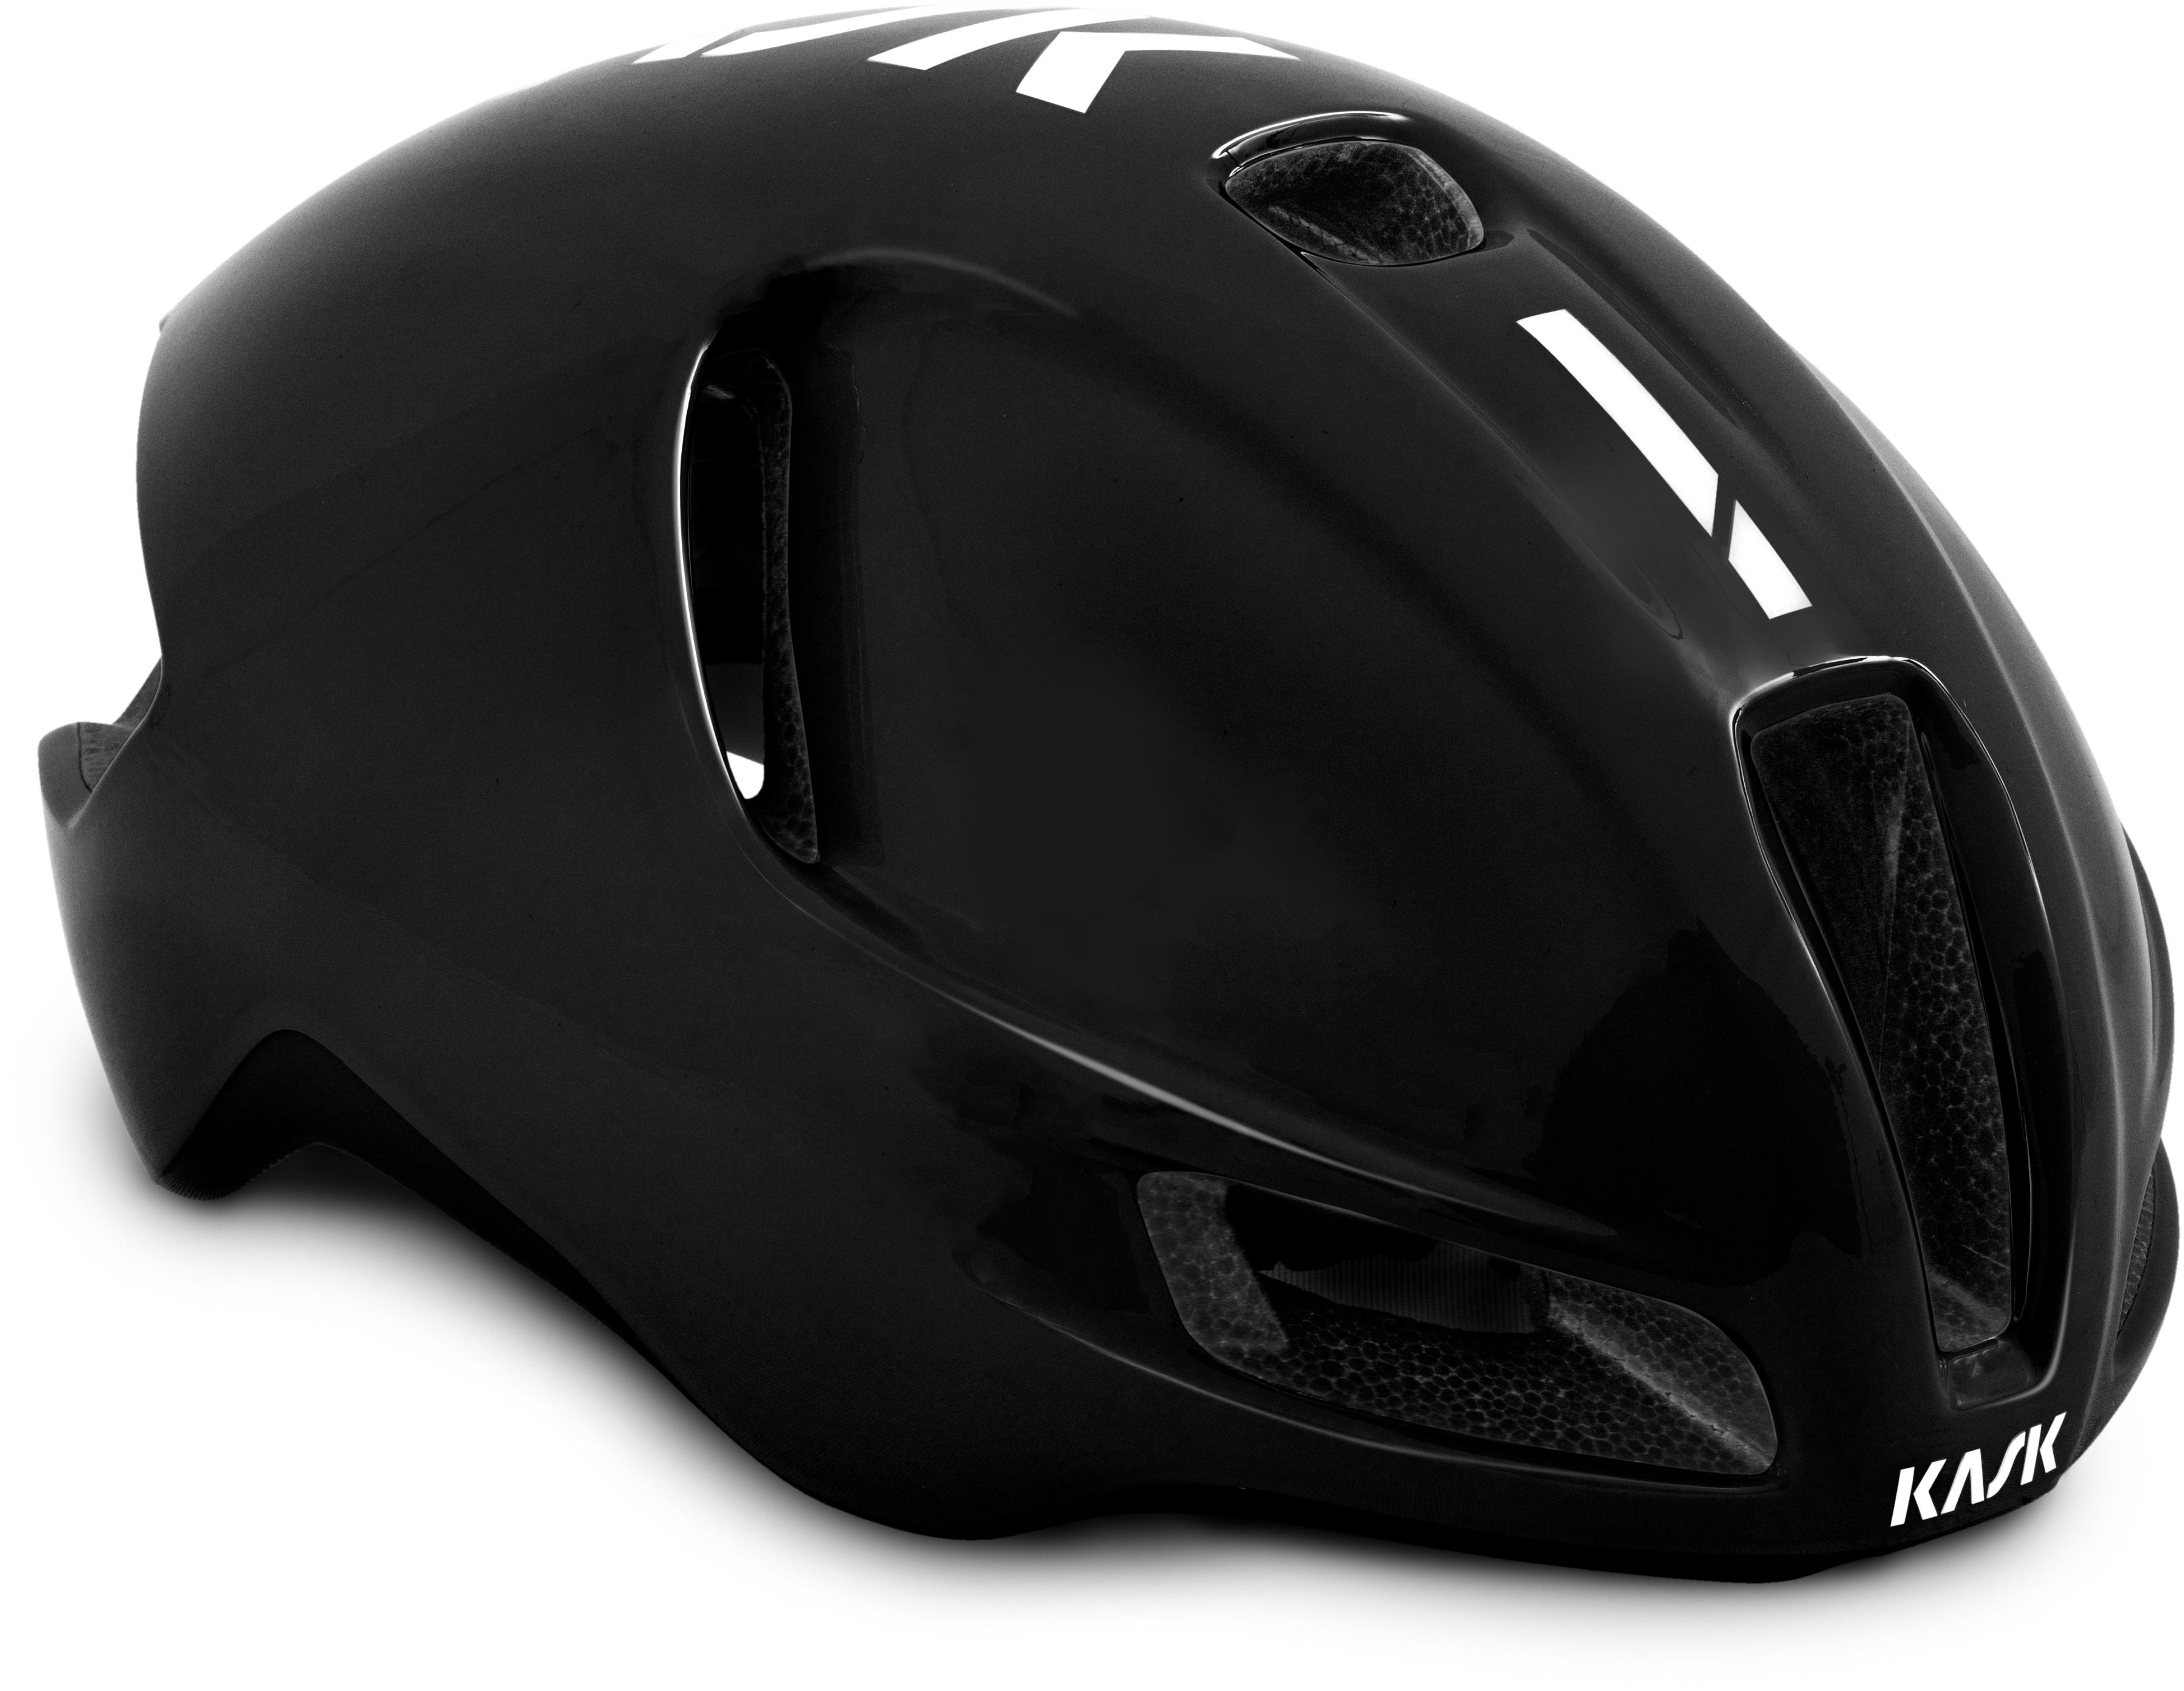 Kask Utopia Road Helmet Black/White, Small